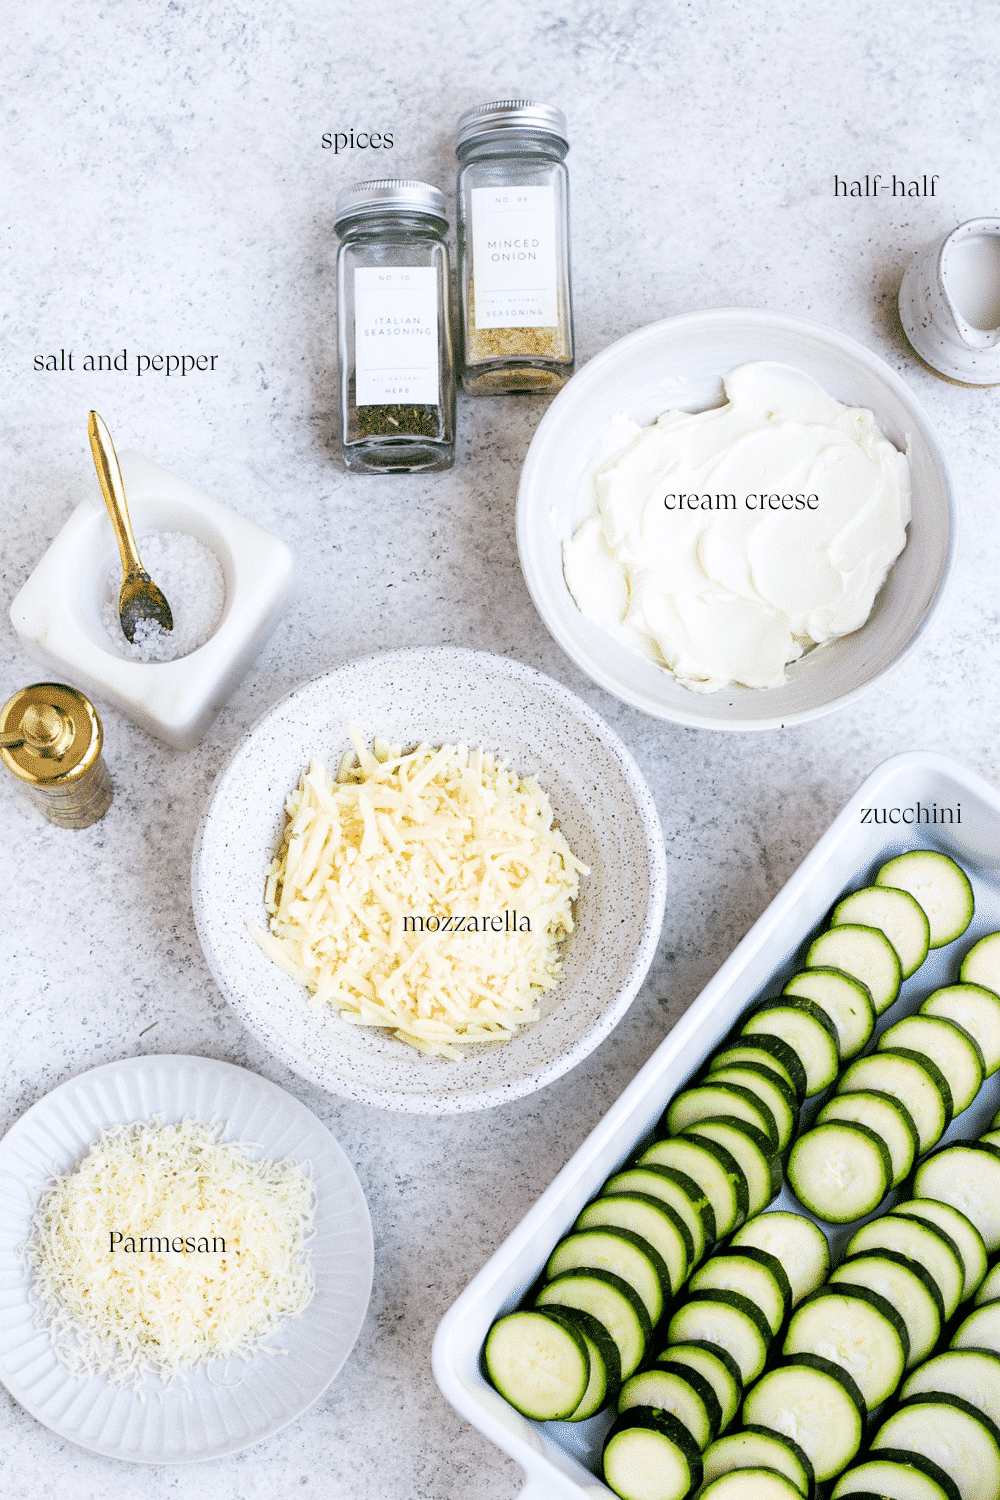 Ingredients for zucchini casserole.